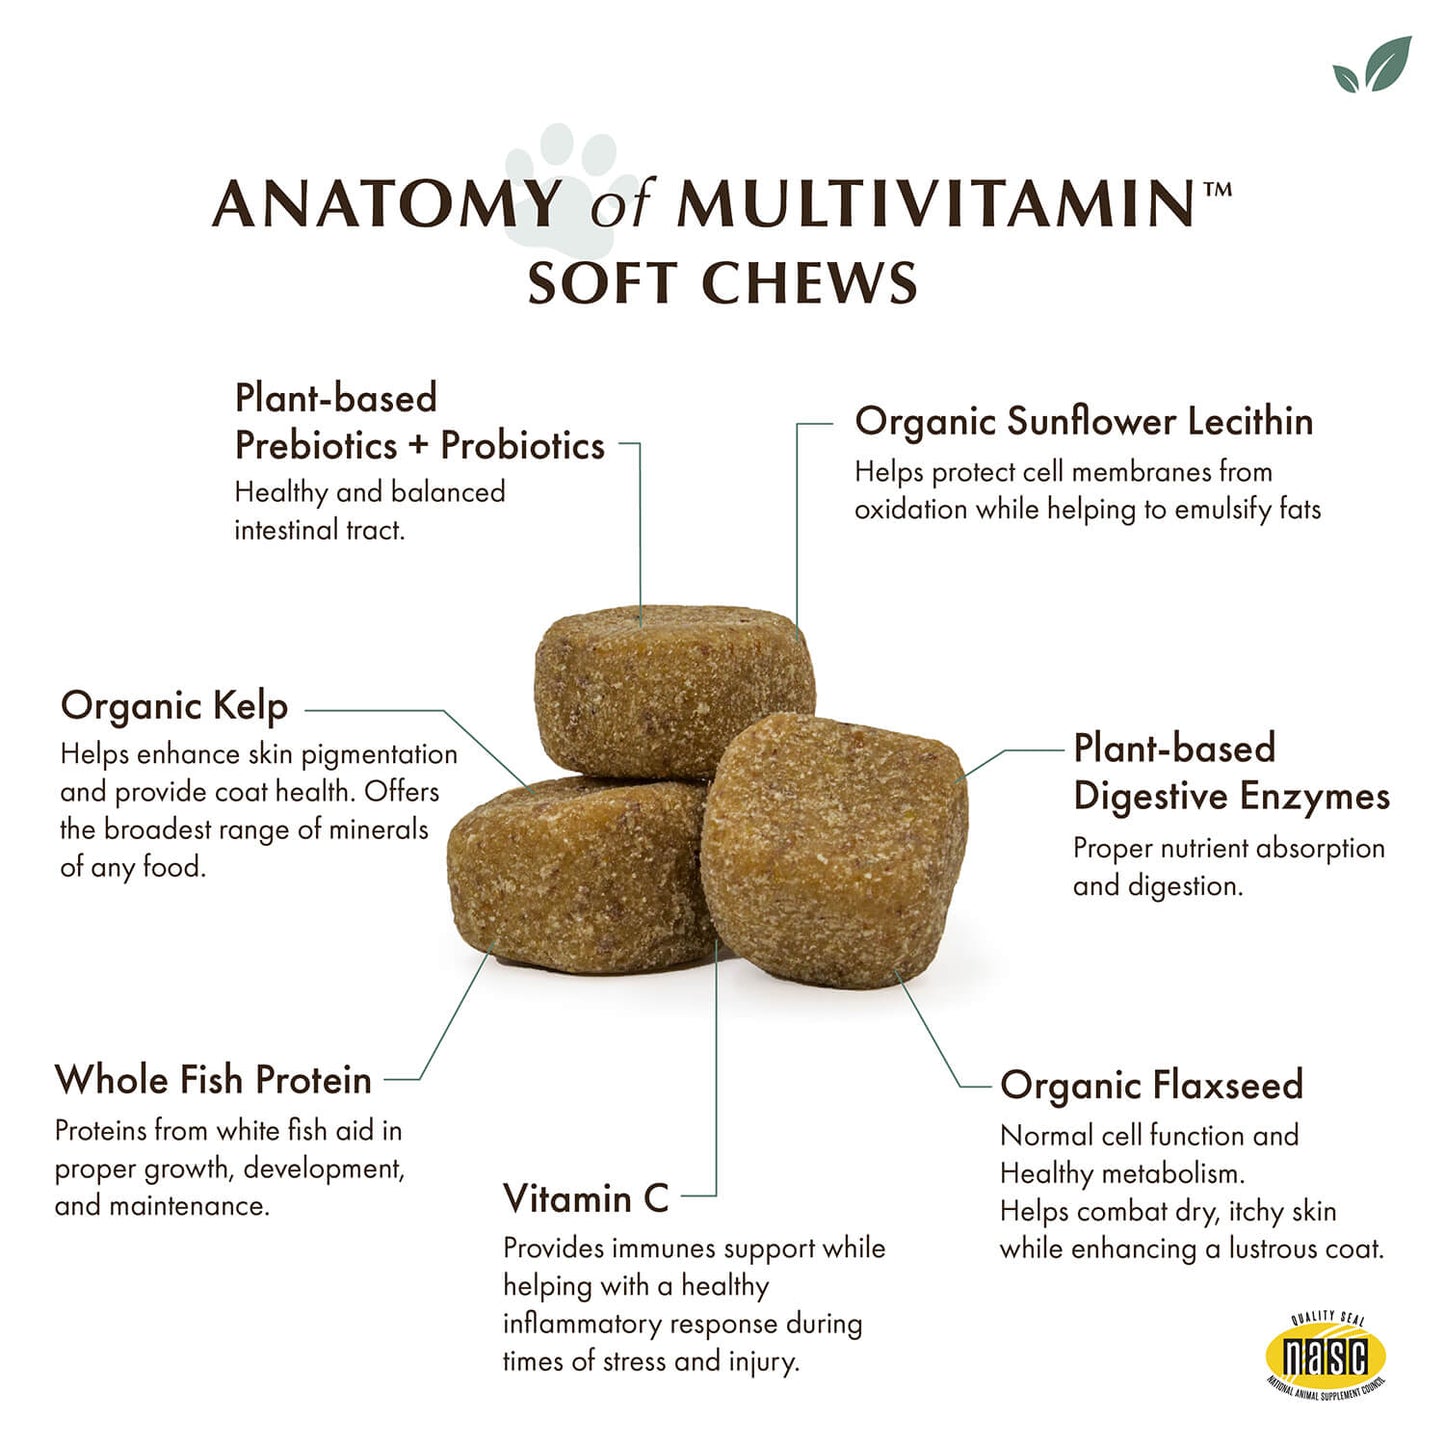 Daily Multivitamin Soft Chews